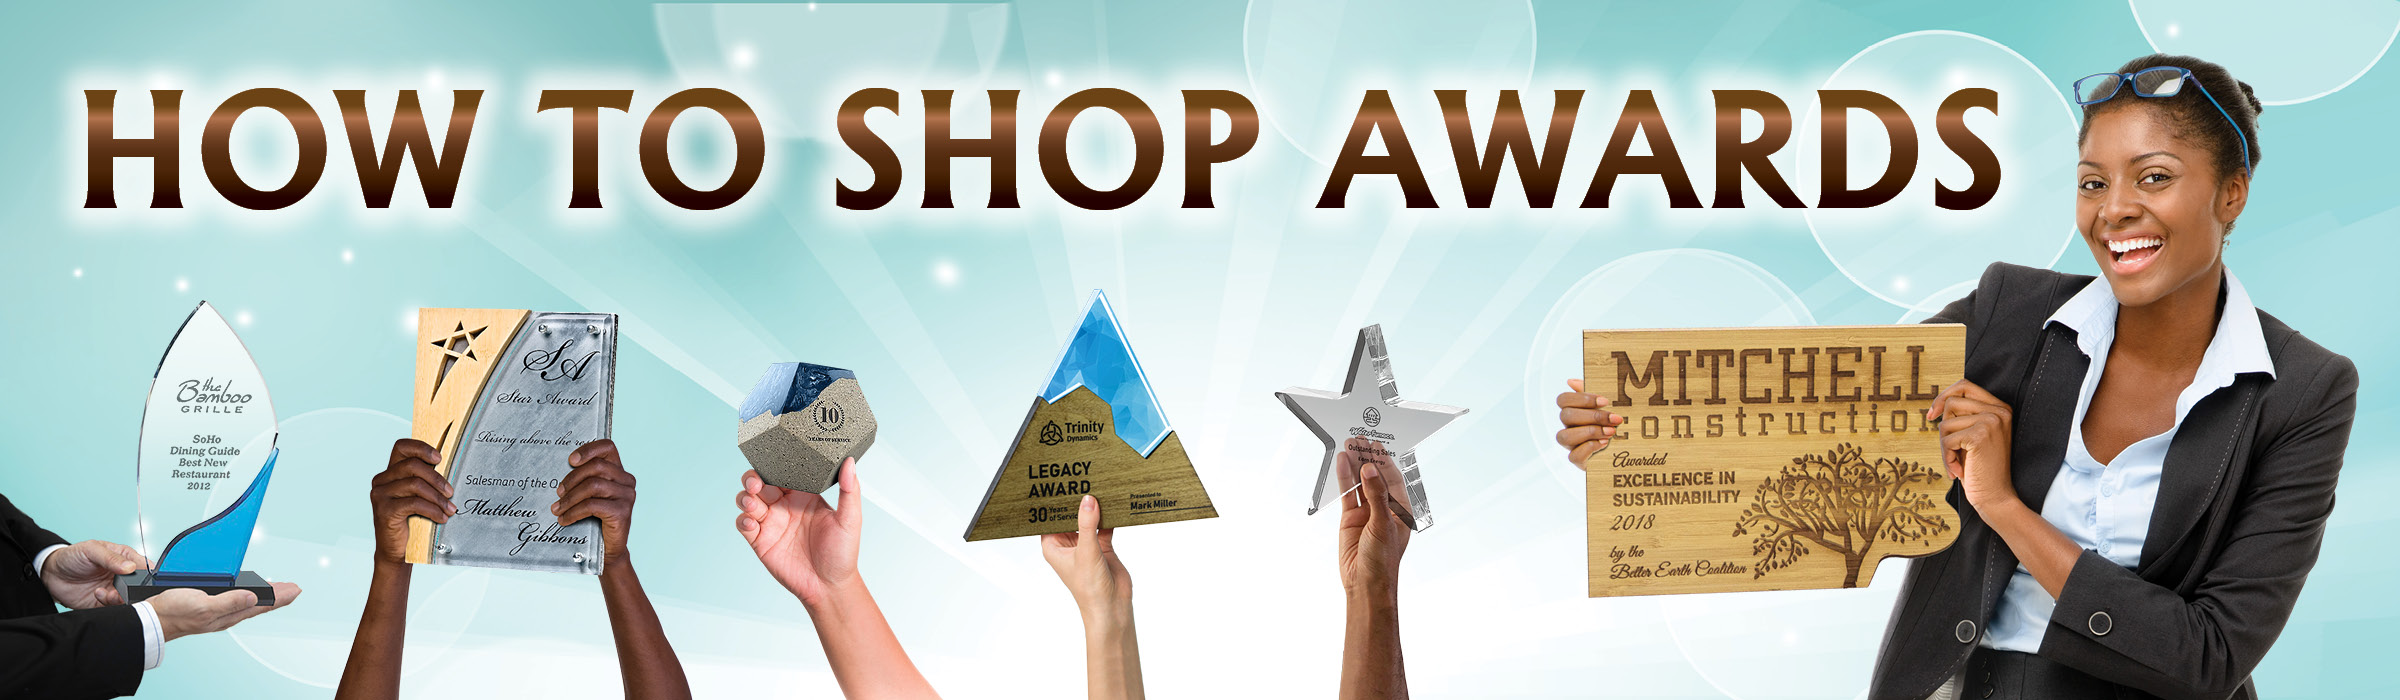 How To Shop Awards_Blog